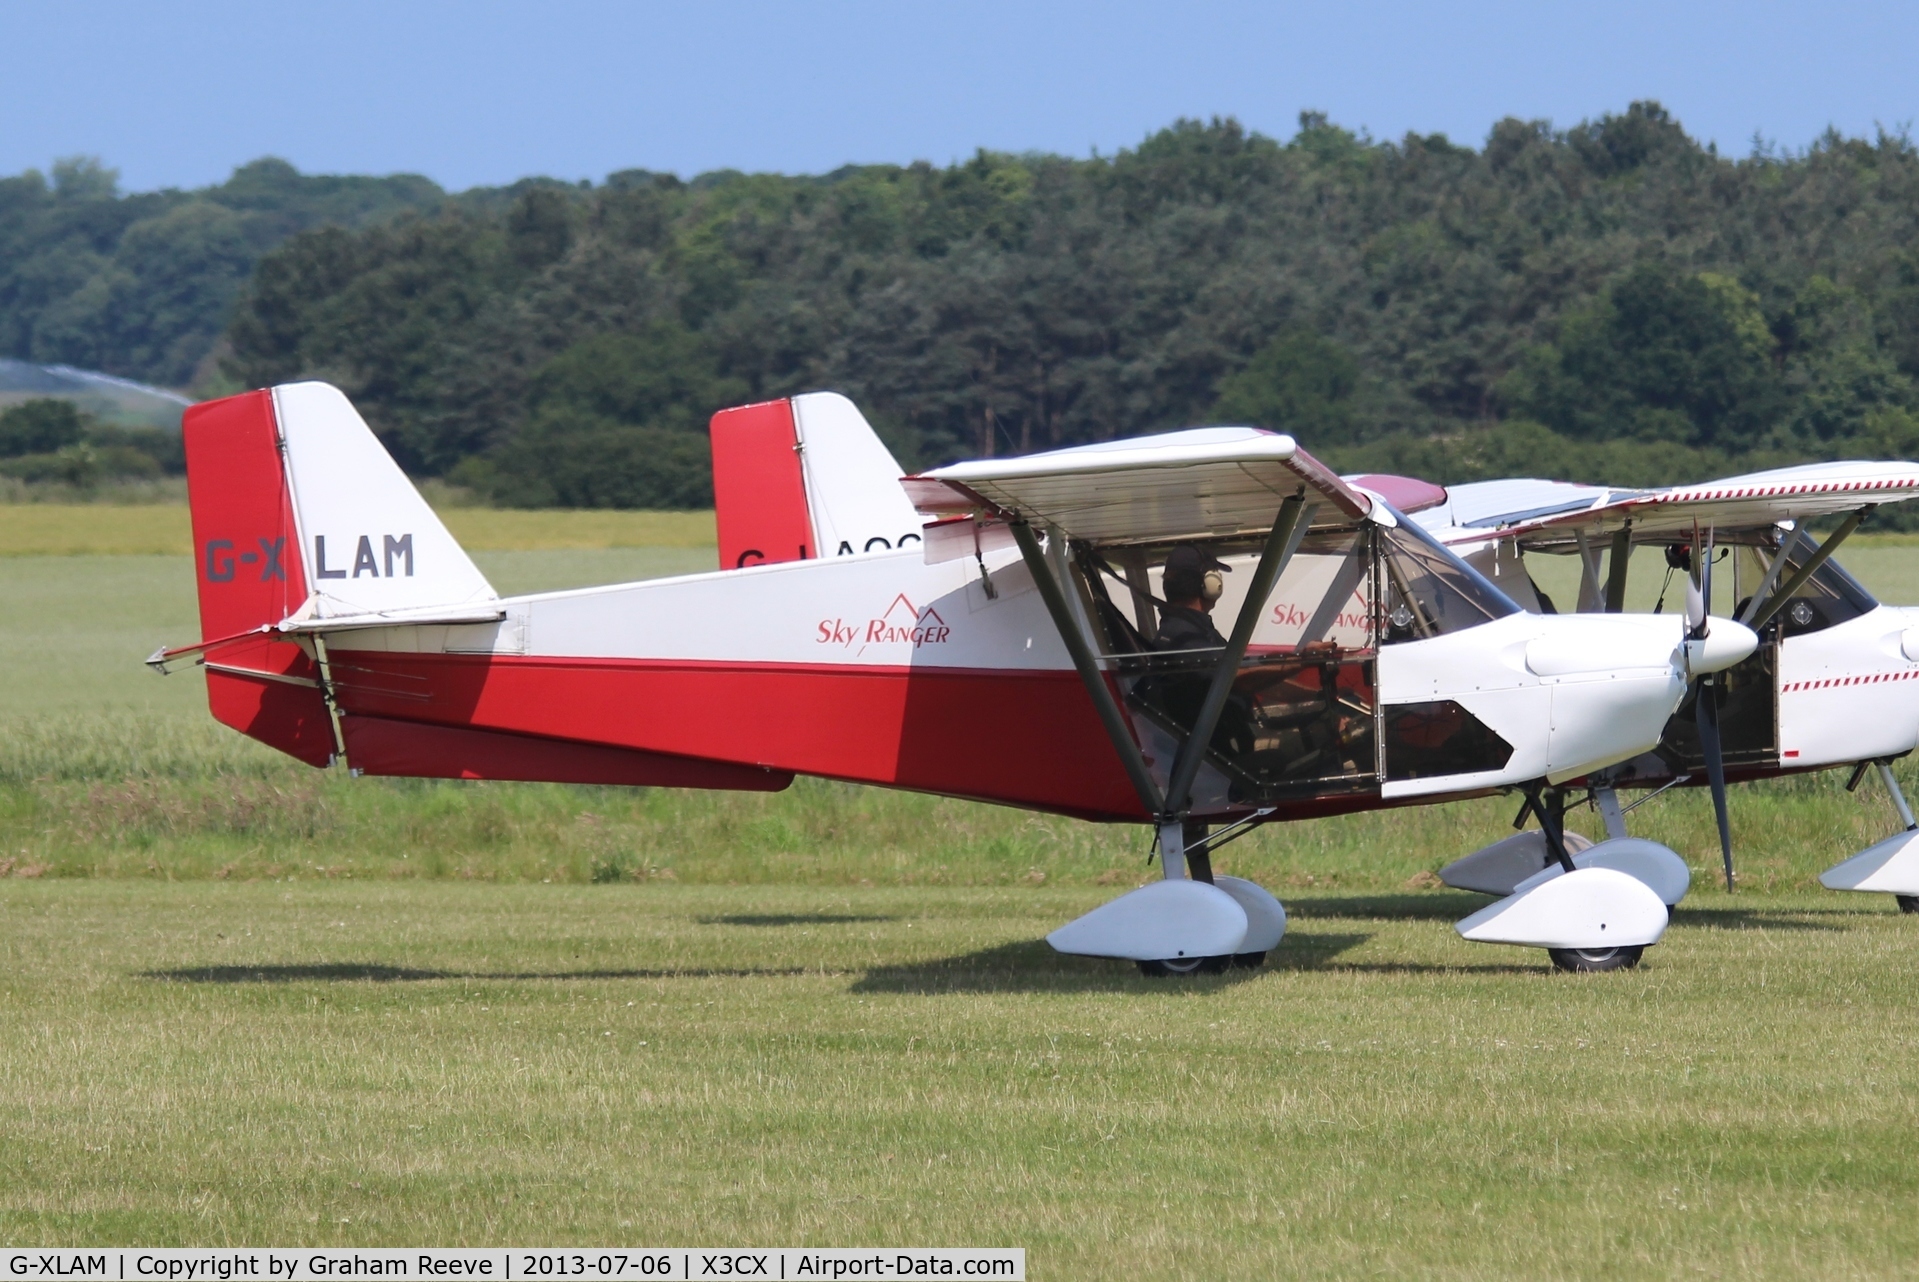 G-XLAM, 2005 Best Off Skyranger Swift 912S(1) C/N BMAA/HB/460, Just landed at Northrepps.